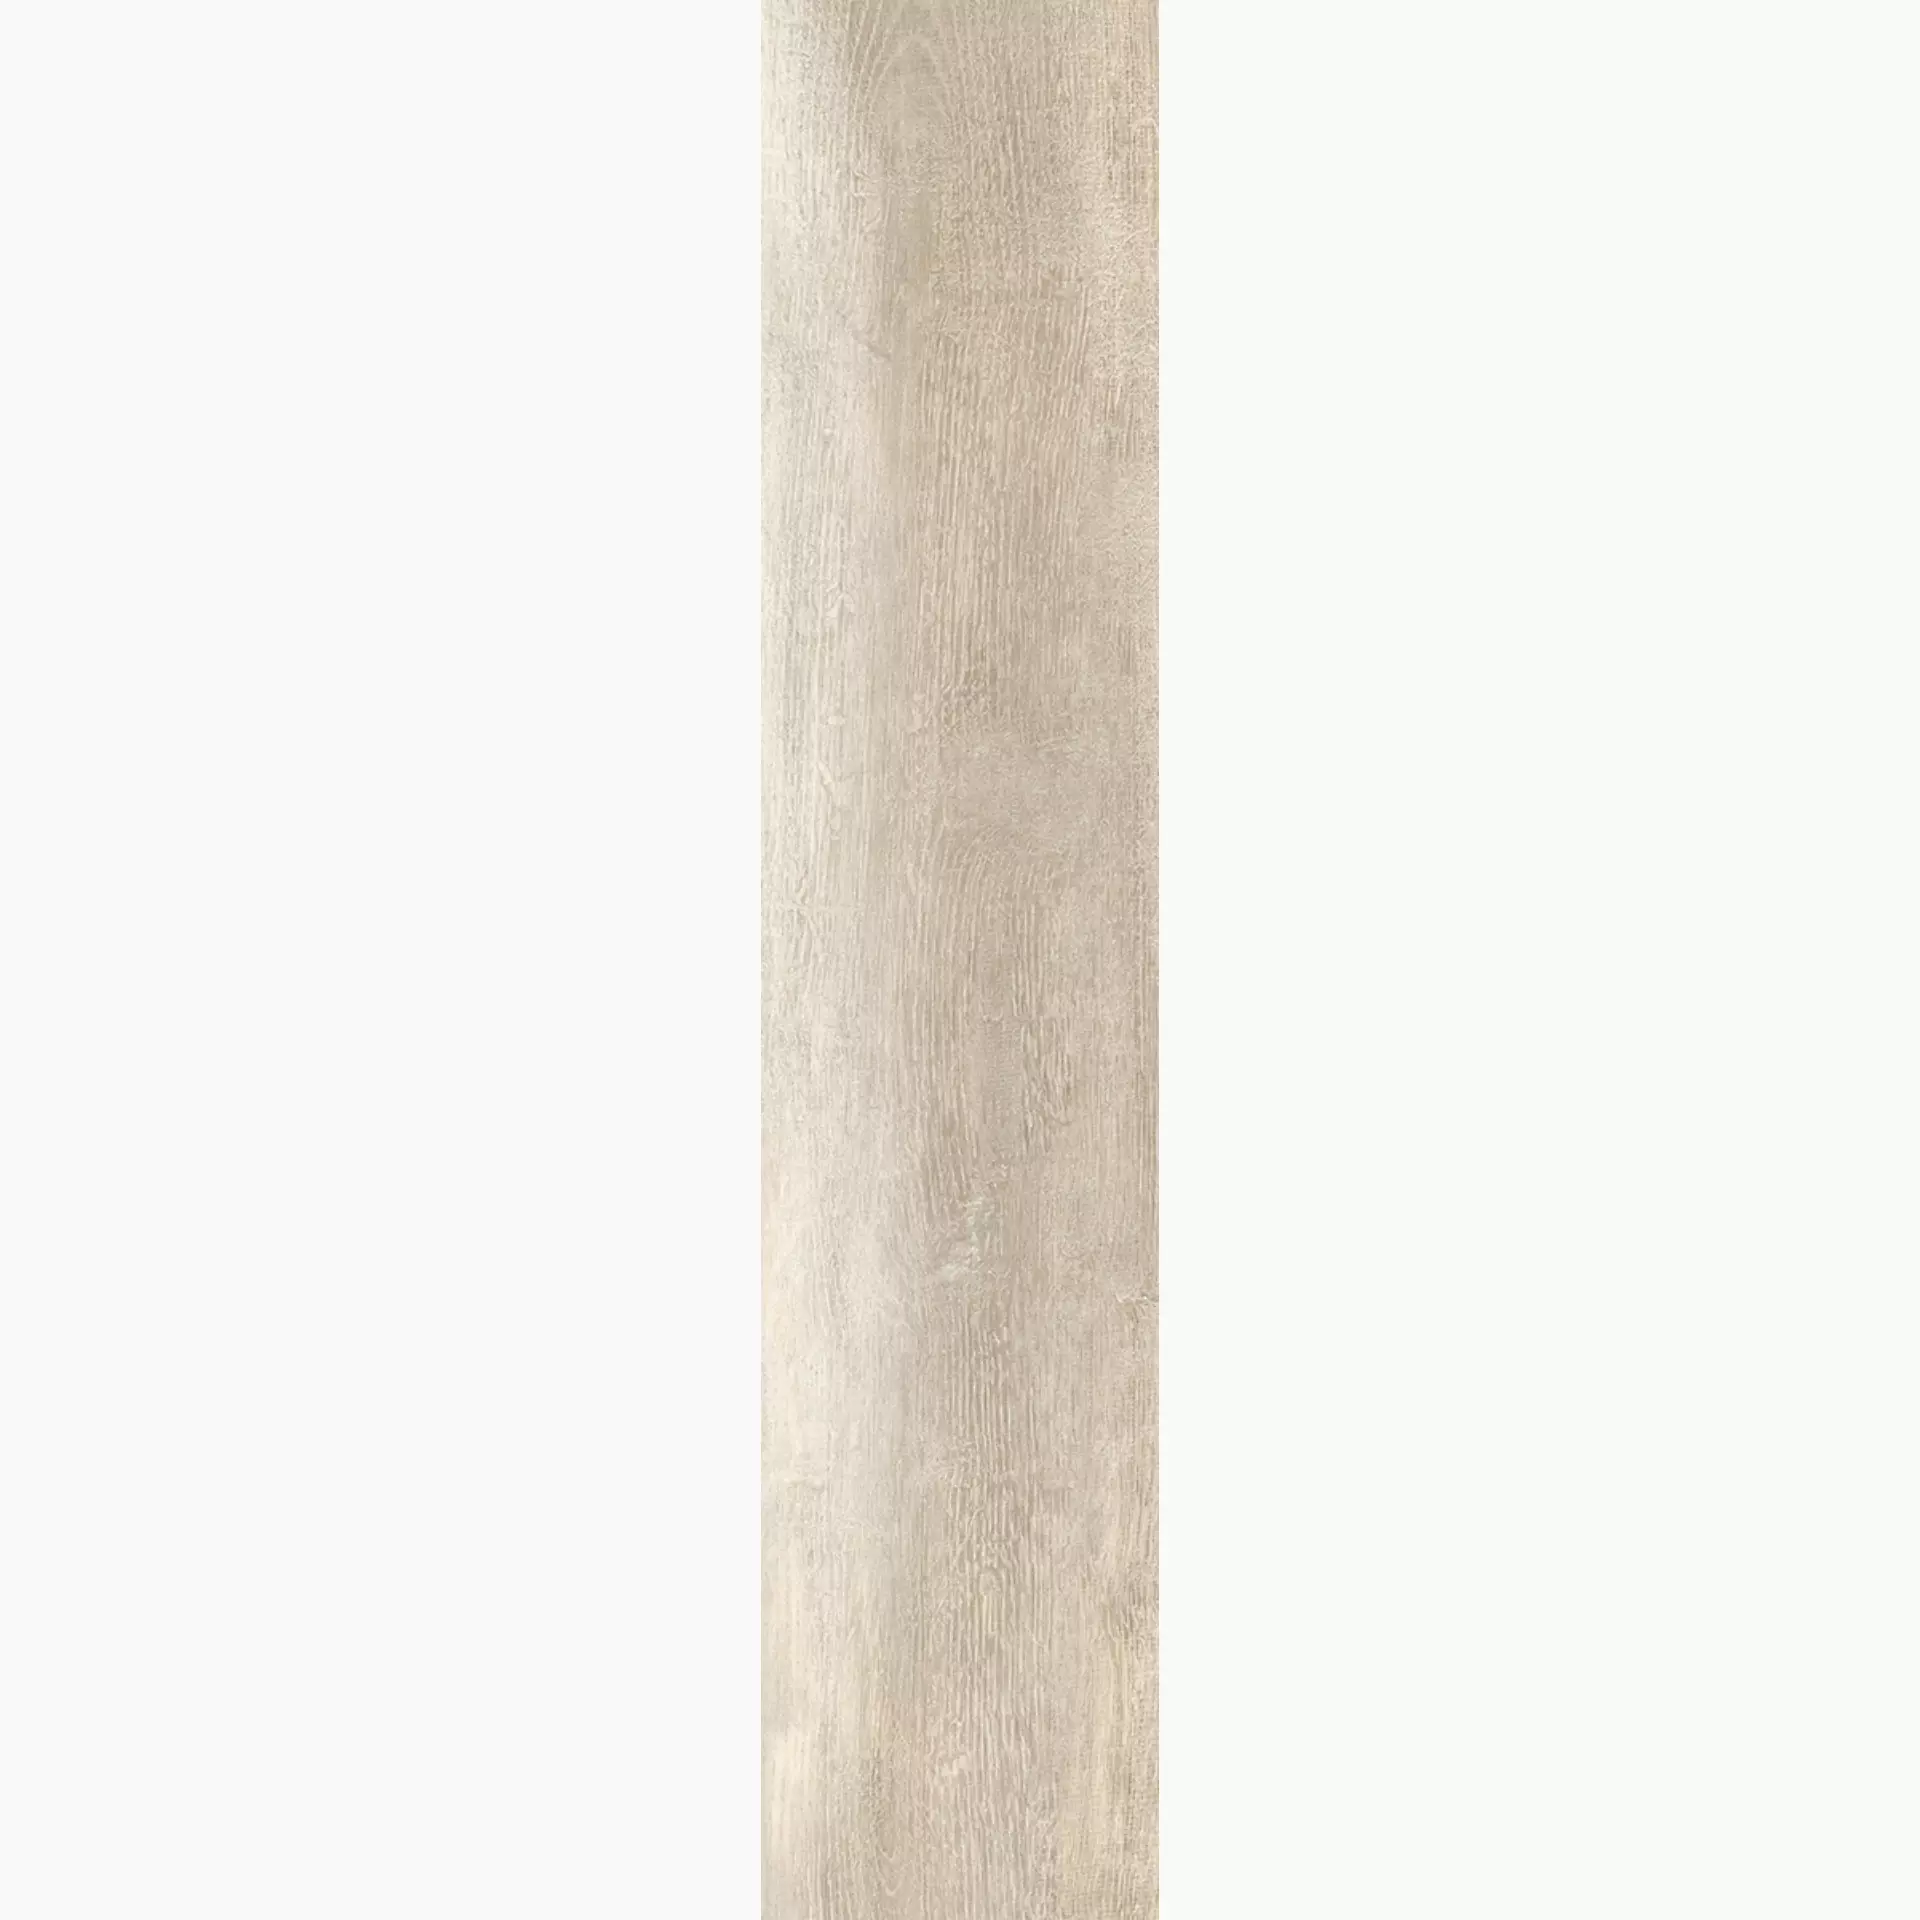 Rondine Greenwood Beige Naturale J86326 24x120cm 8,5mm